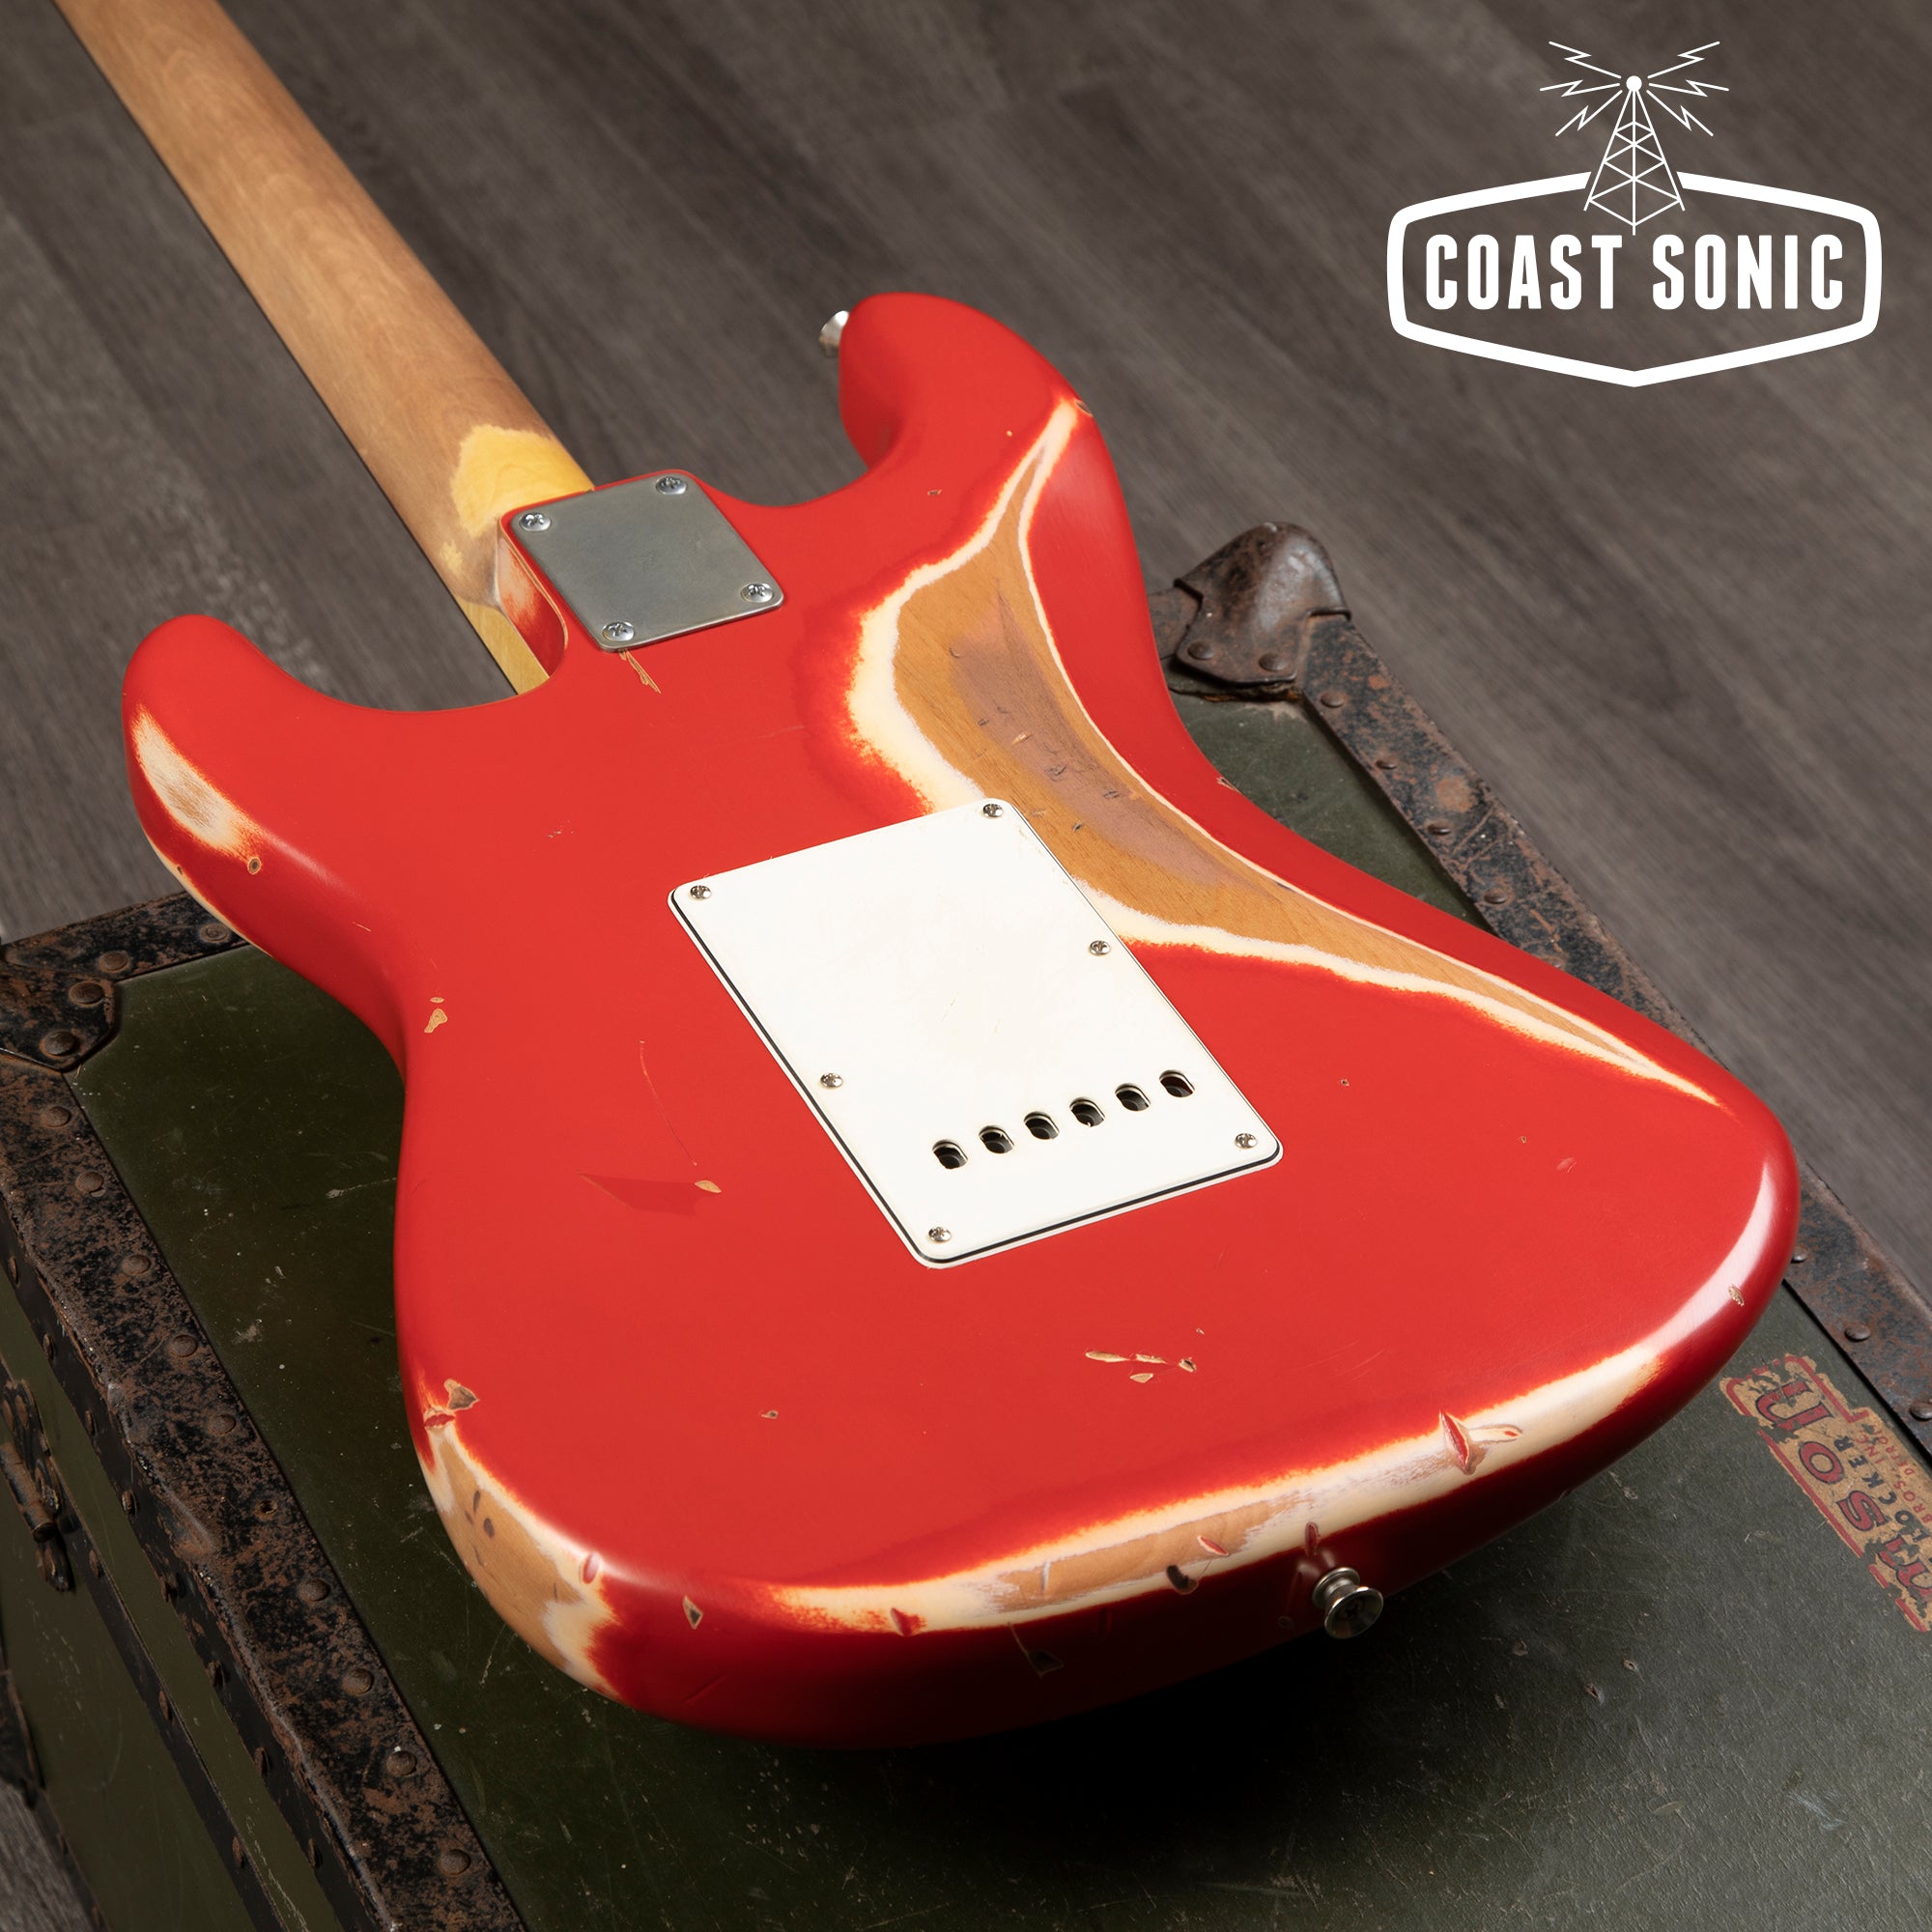 Nash Guitars S-67 Dakota Red, Large CBS headstock, heavy relic